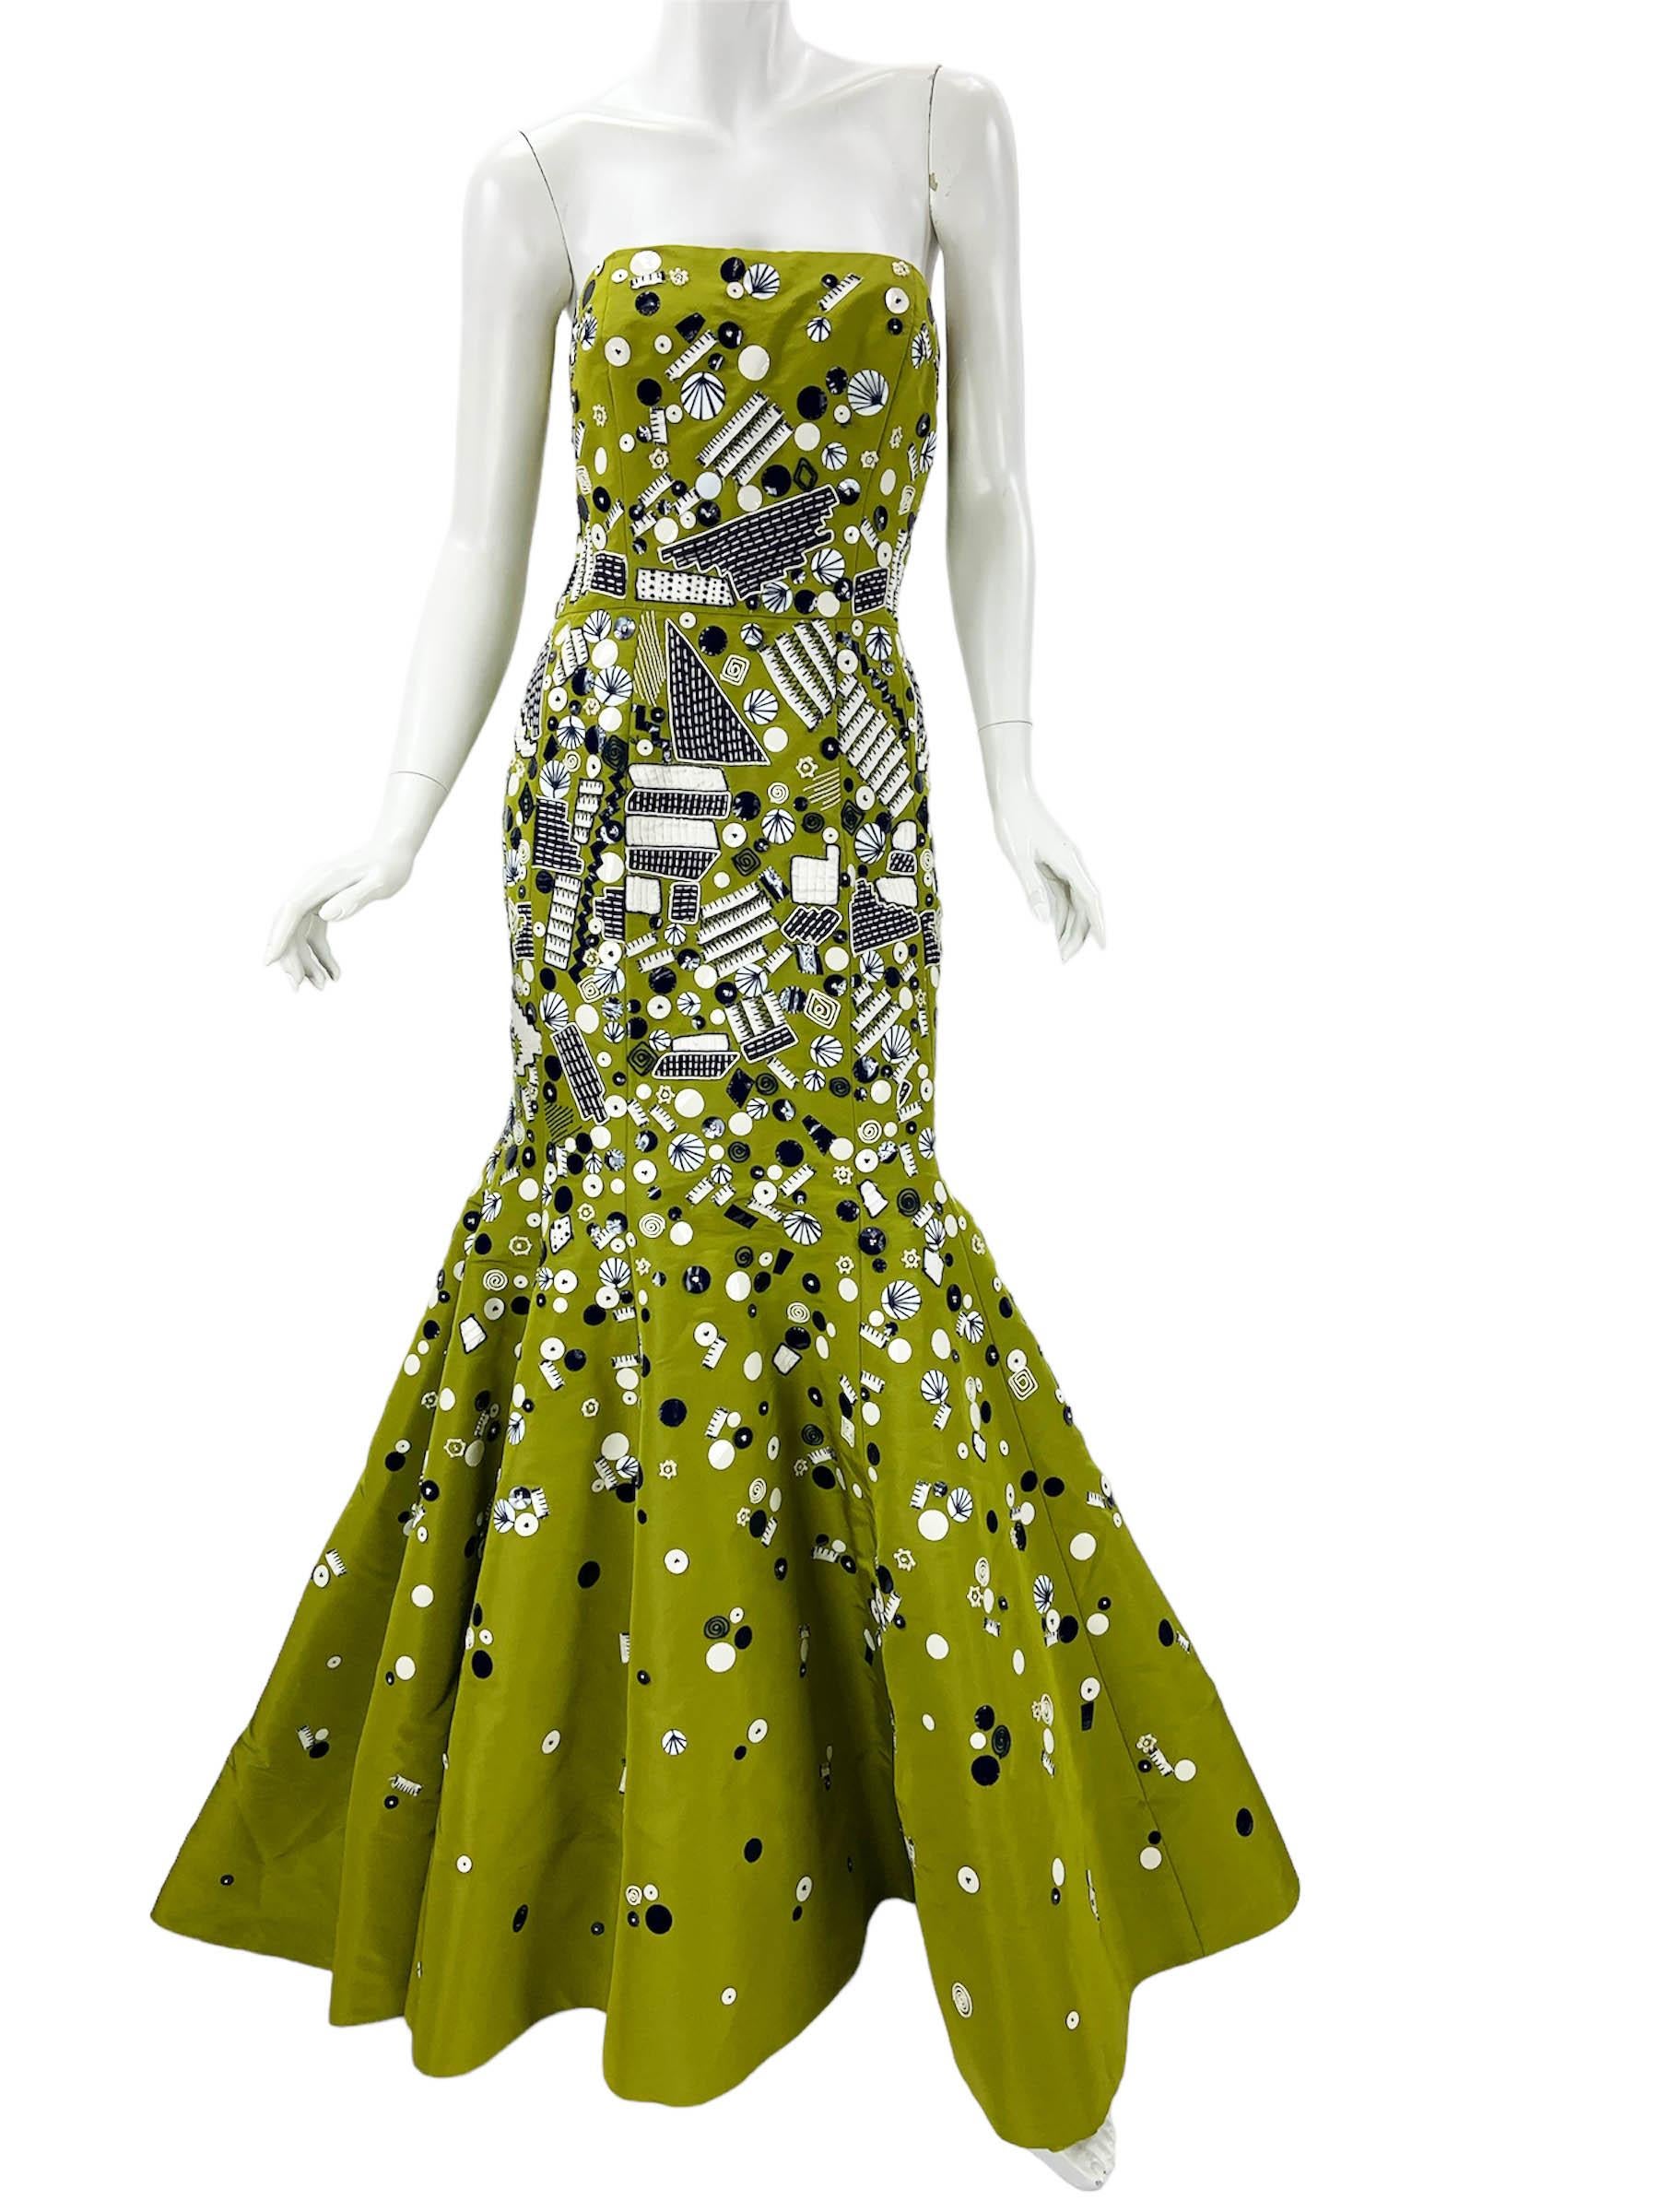 NWT Oscar de la Renta S/S 2009 Green Embellished Silk Taffeta Peplum Dress US 10 For Sale 2